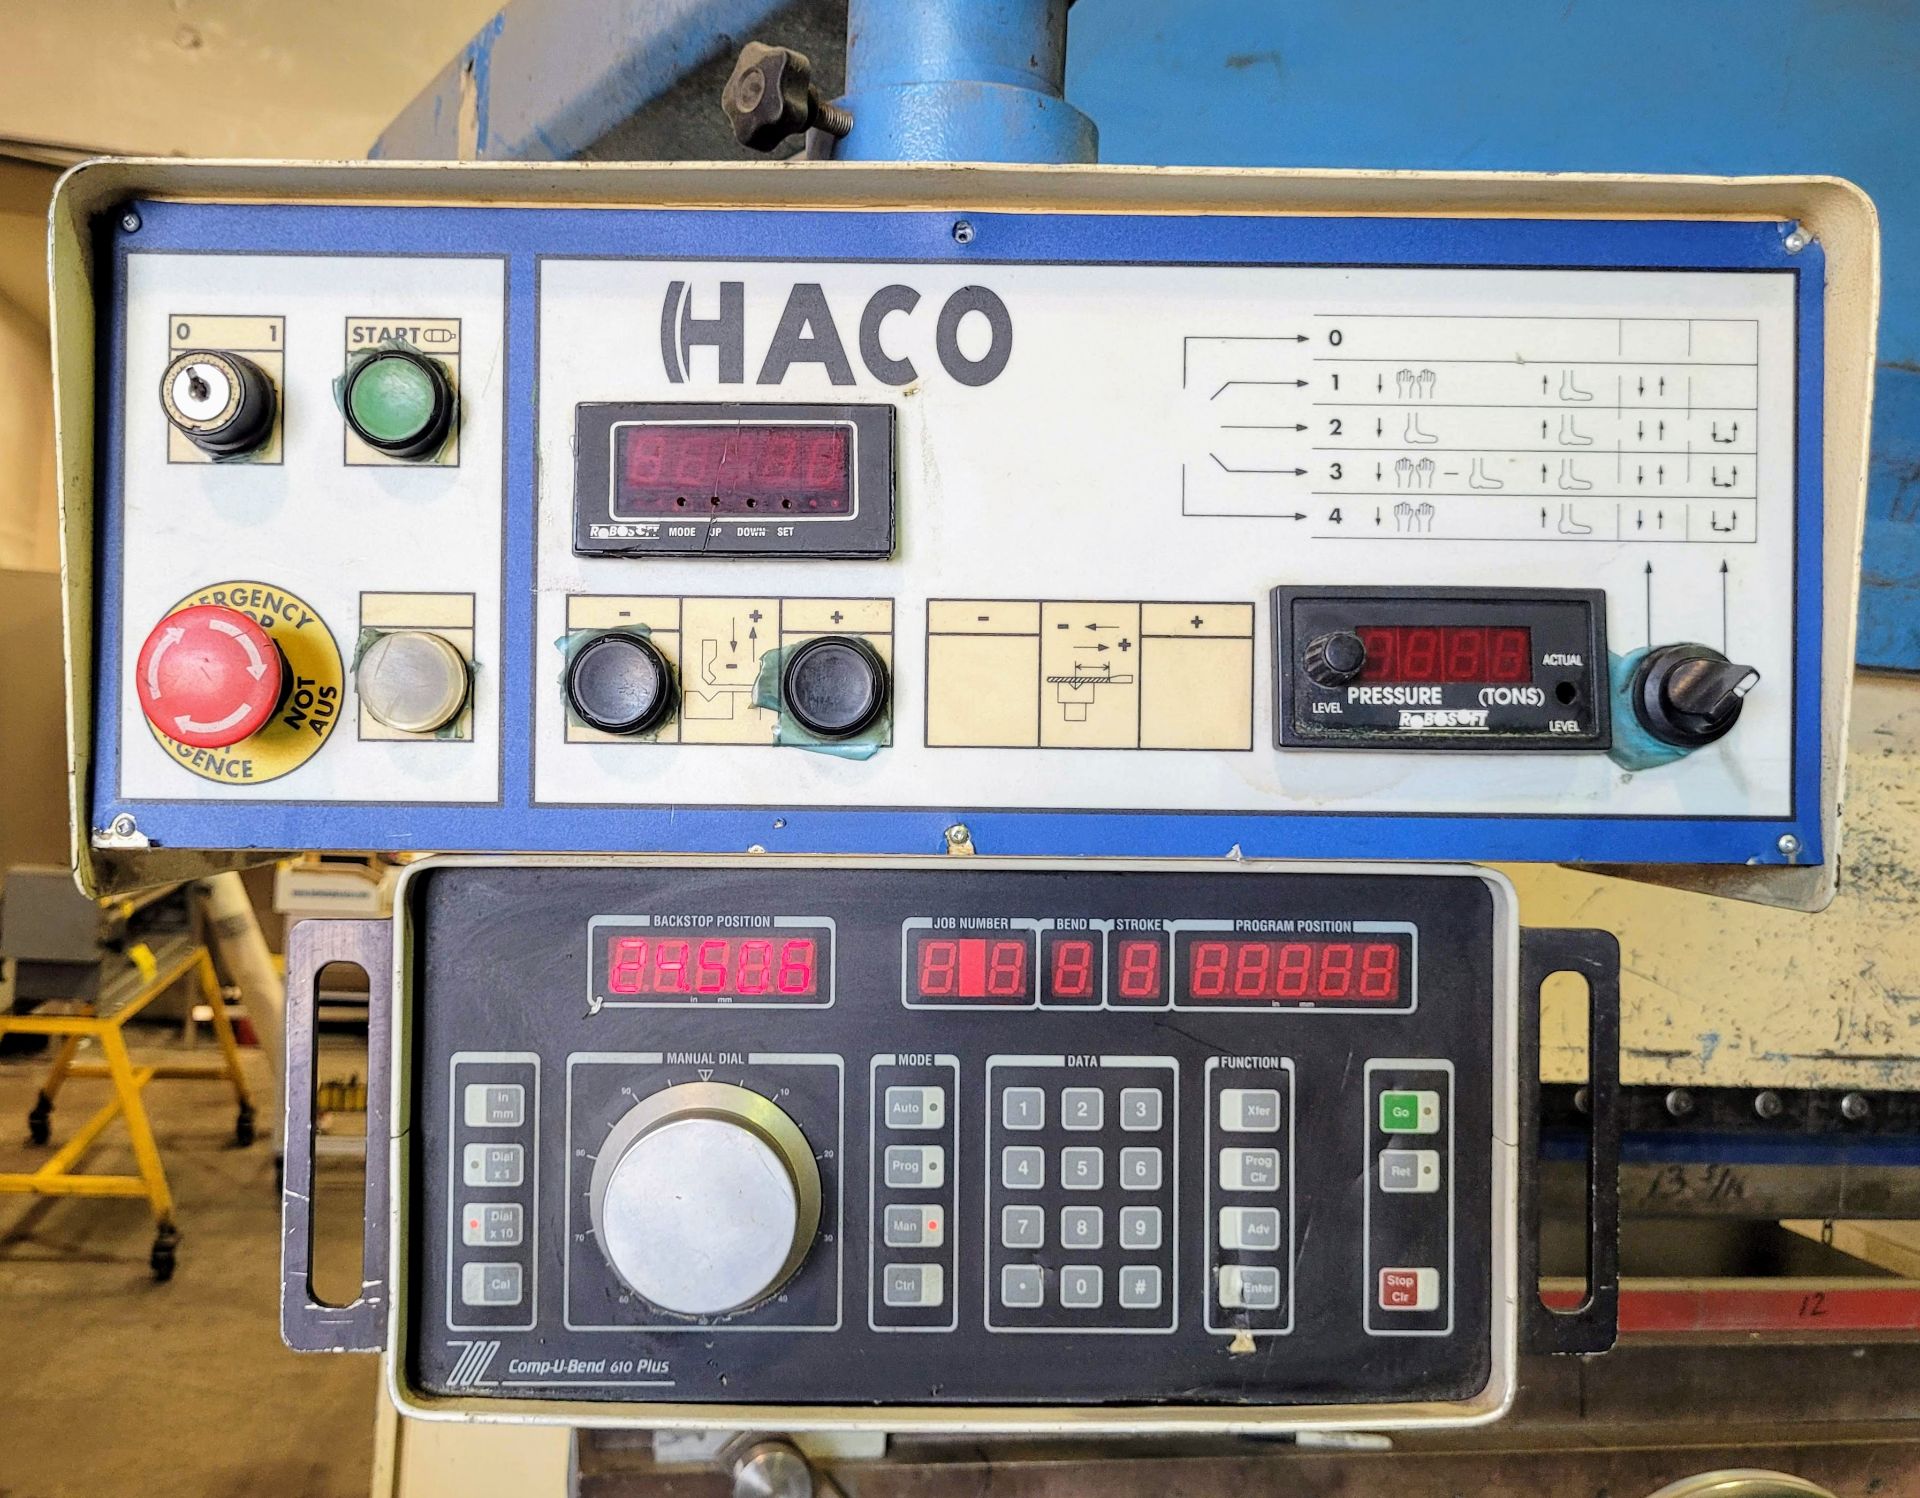 HACO PPM30135 HYDRAULIC PRESS BRAKE, 150-TON X 10' CAP., S/N: 58979, COMP-U-BEND 610 PLUS CNC BACK - Image 2 of 12